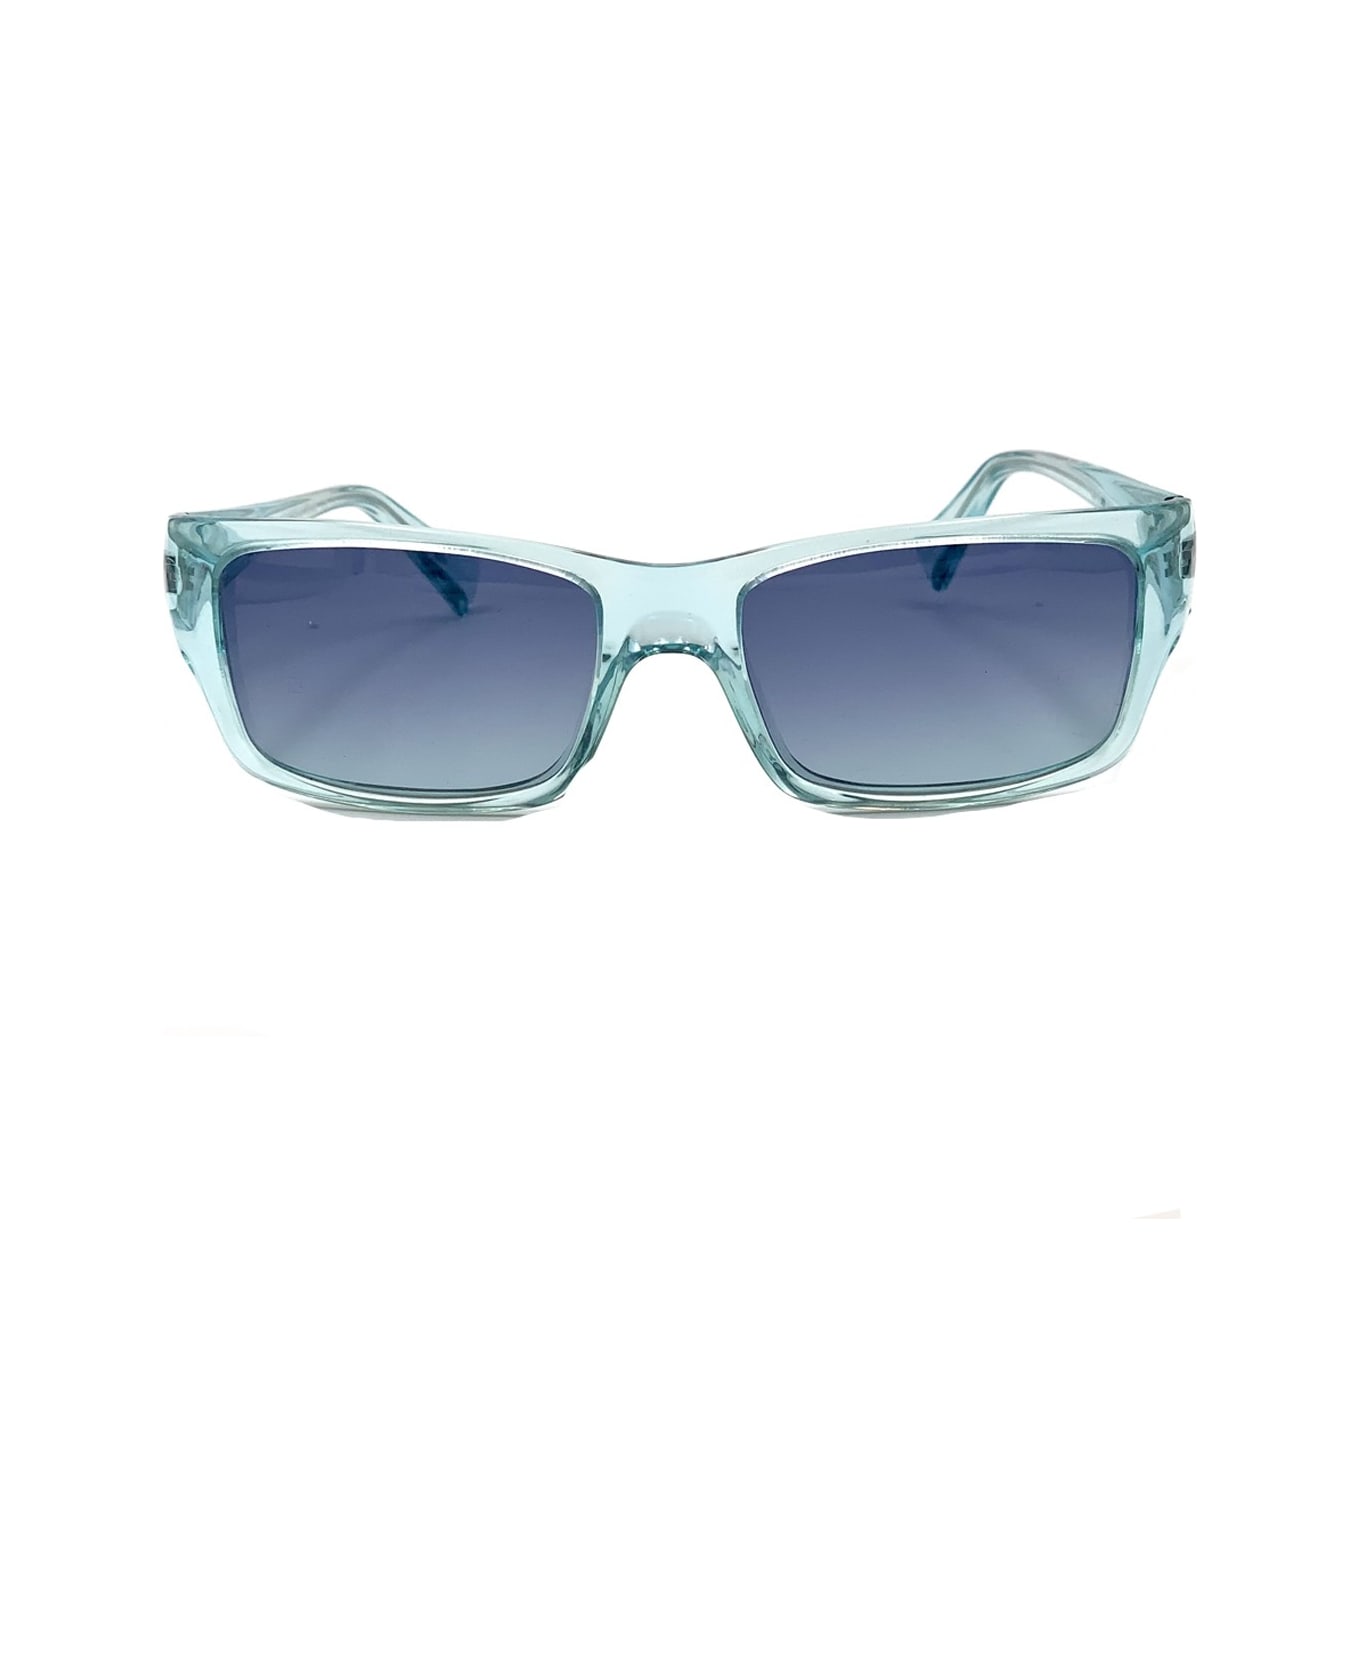 Alain Mikli A0641 Sunglasses - Trasparente